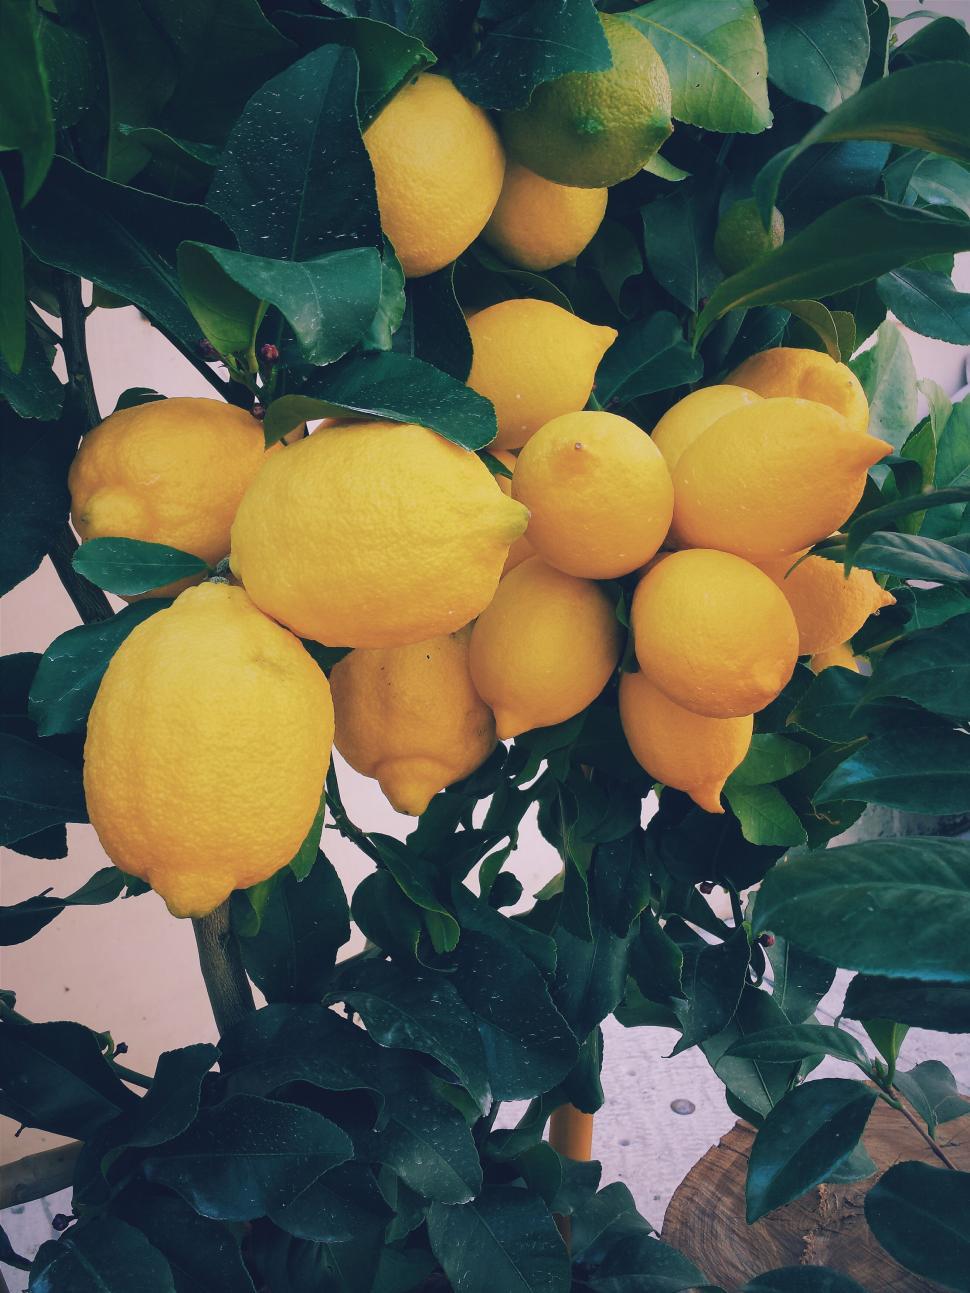 Free Image of Ripe lemons growing on a lush tree 